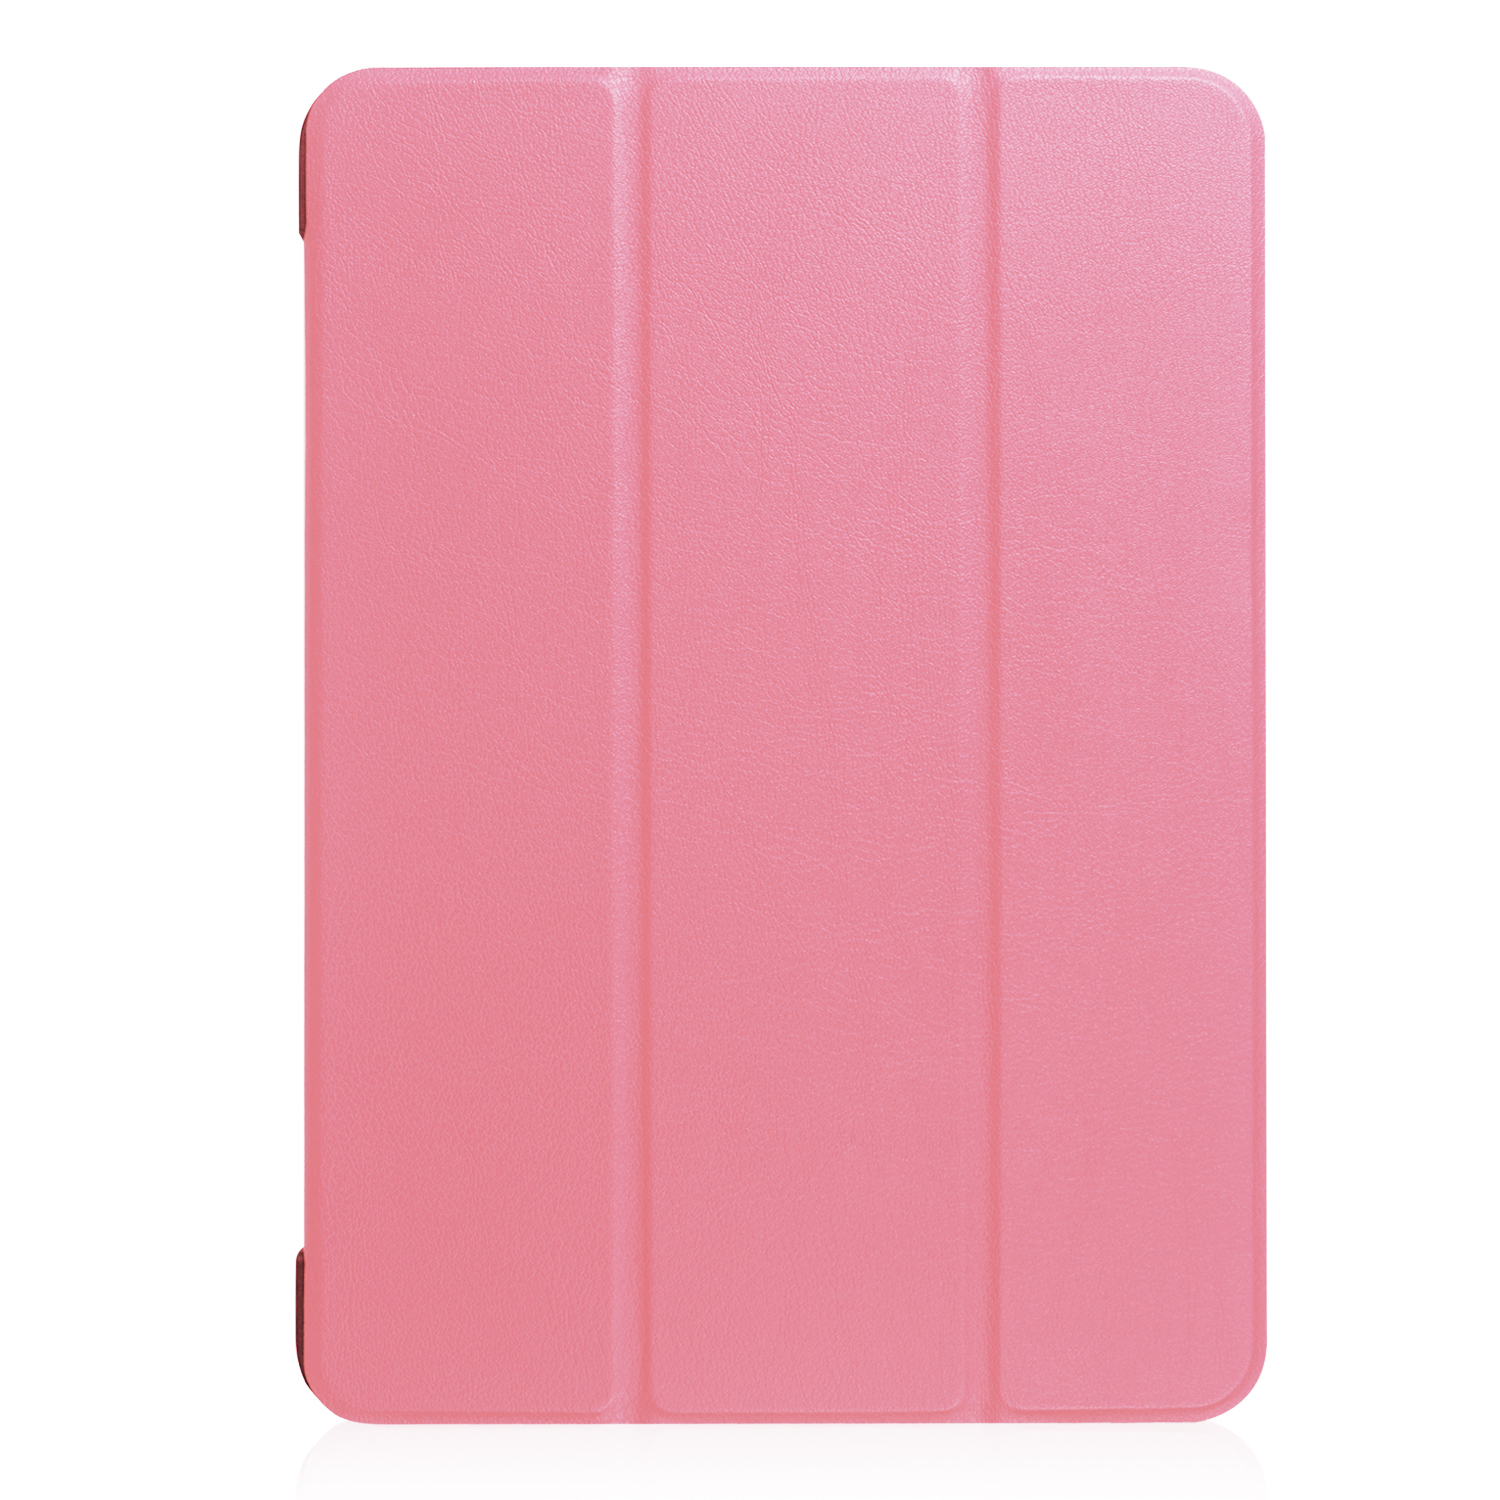 LOBWERK Hülle Schutzhülle Bookcover für 2019 Apple 3 2017 10.5 Rosa Zoll iPad Air Kunstleder, iPad Pro